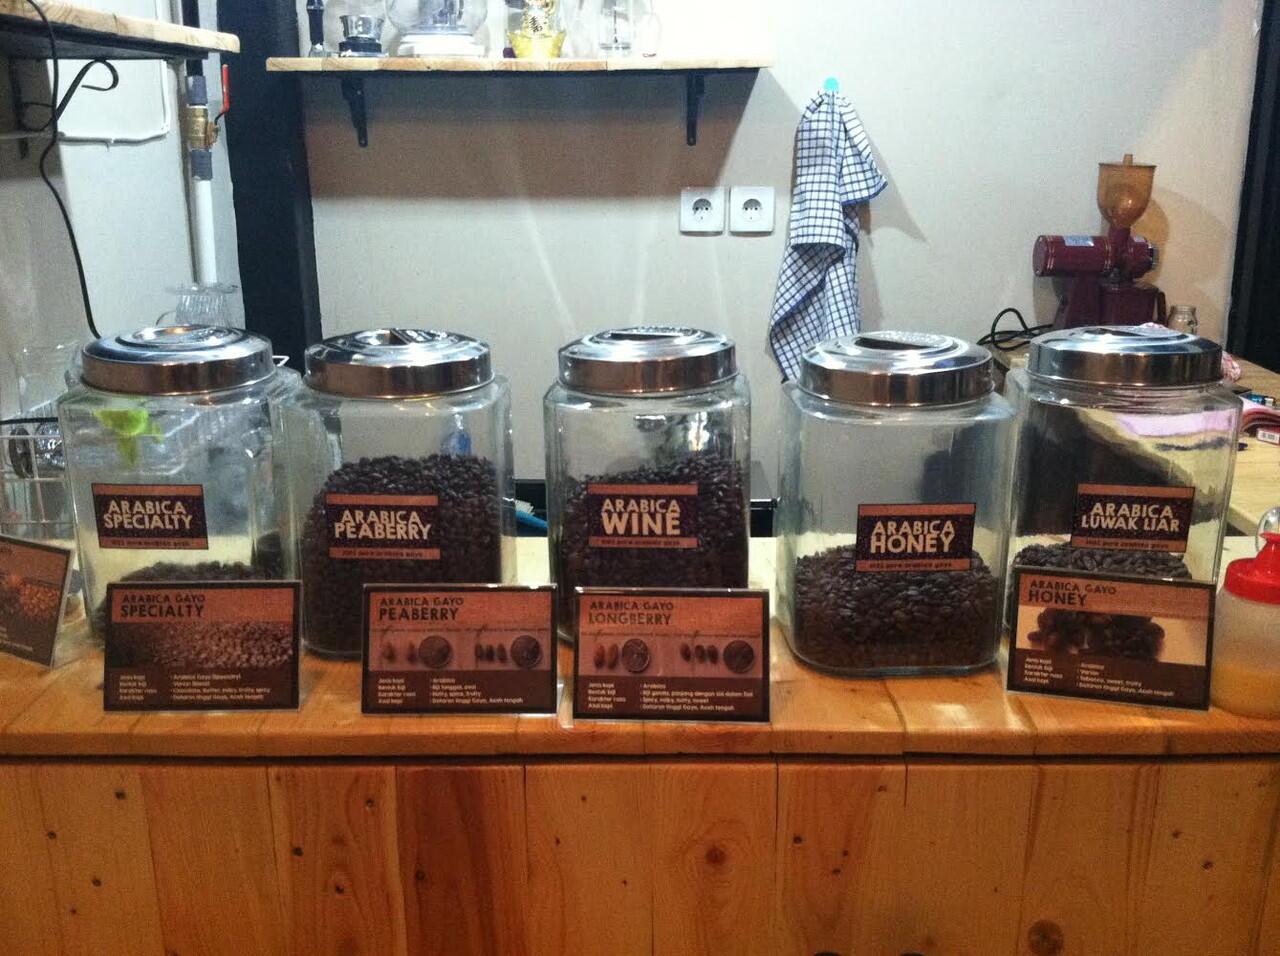 Warung Kopi Gayo - Kedai kopi Arabica cita rasa asli Aceh!